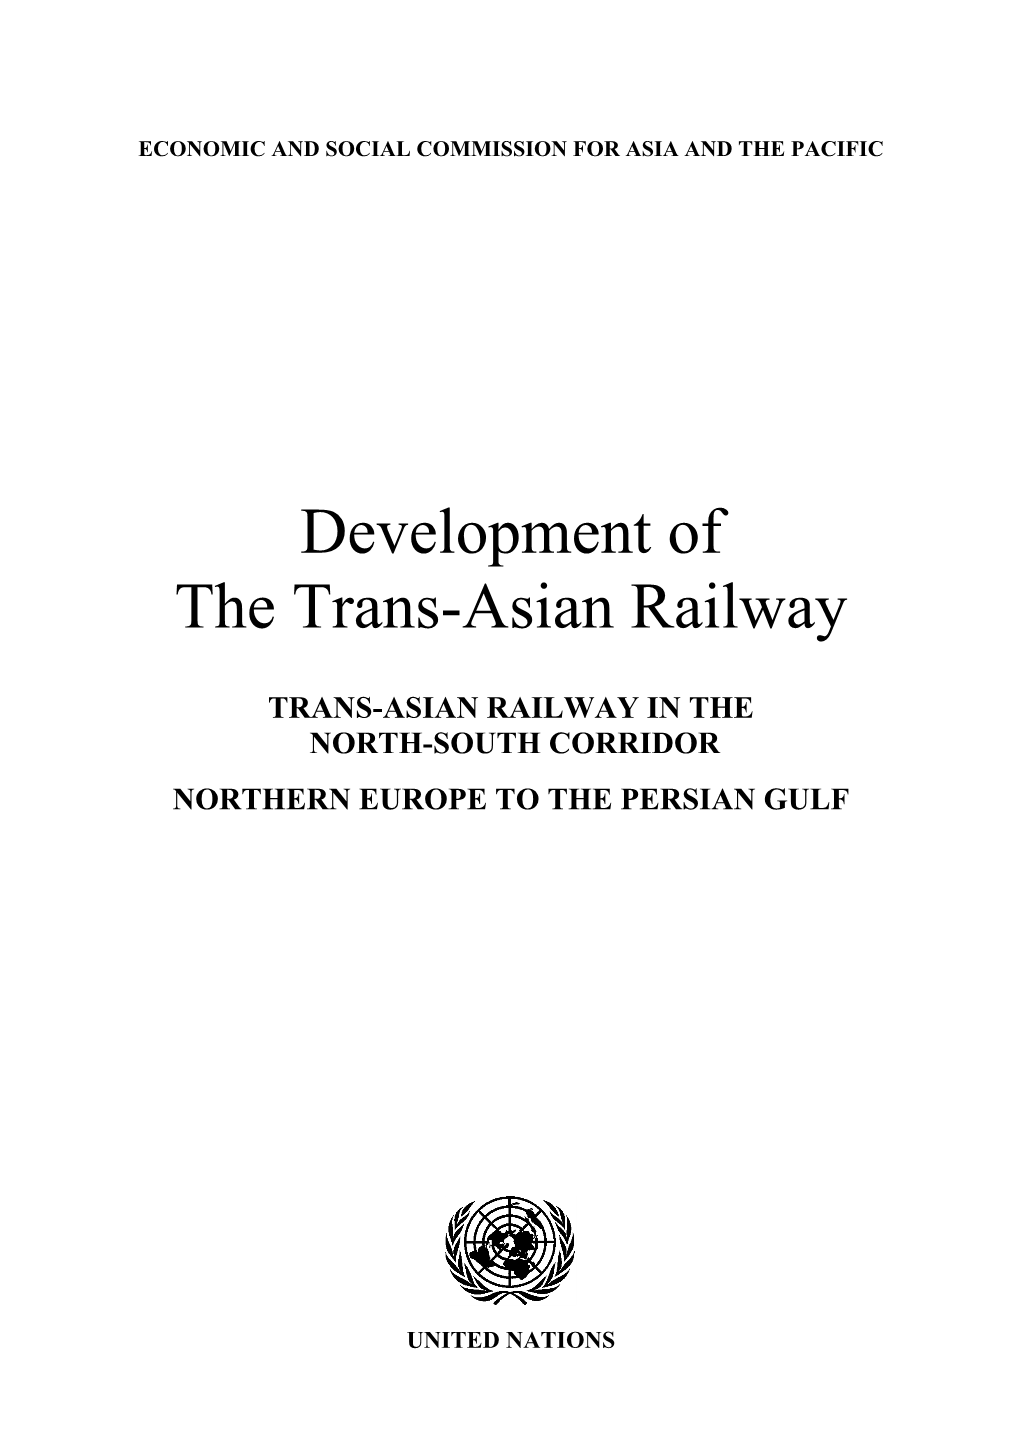 Development of the Trans-Asian Railway